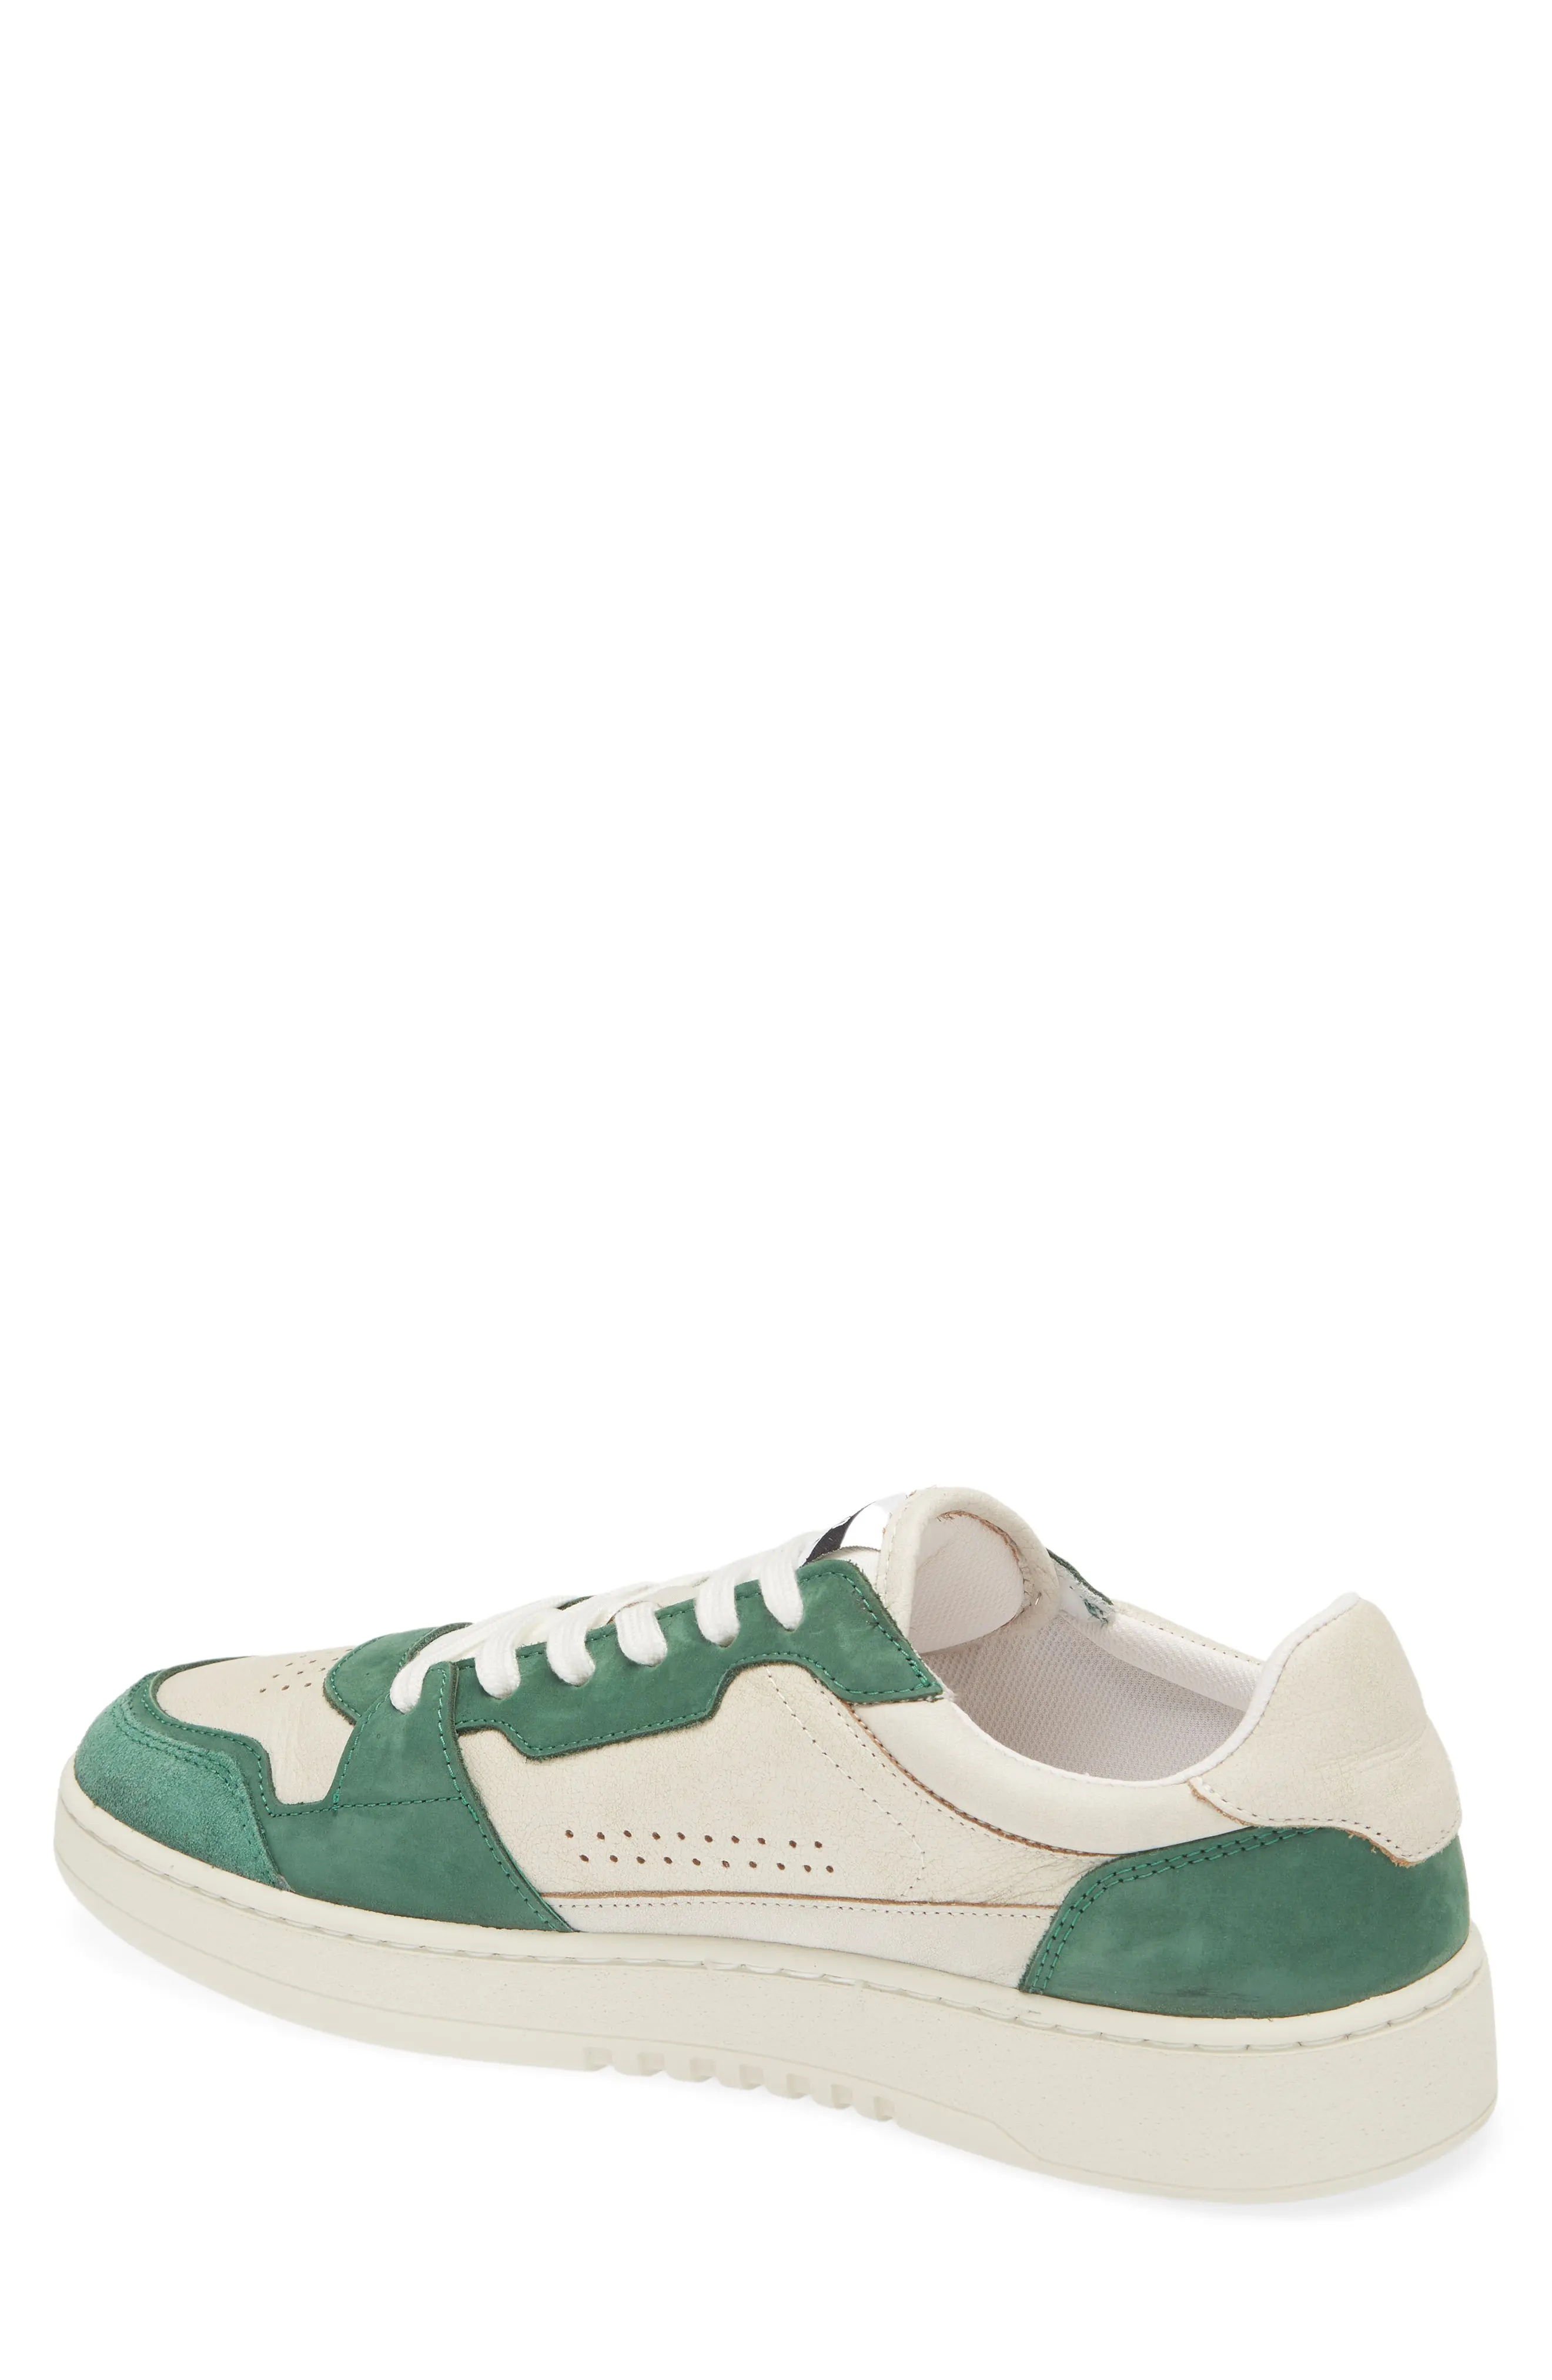 Dice Lo Sneaker in White/Kale Green - 2